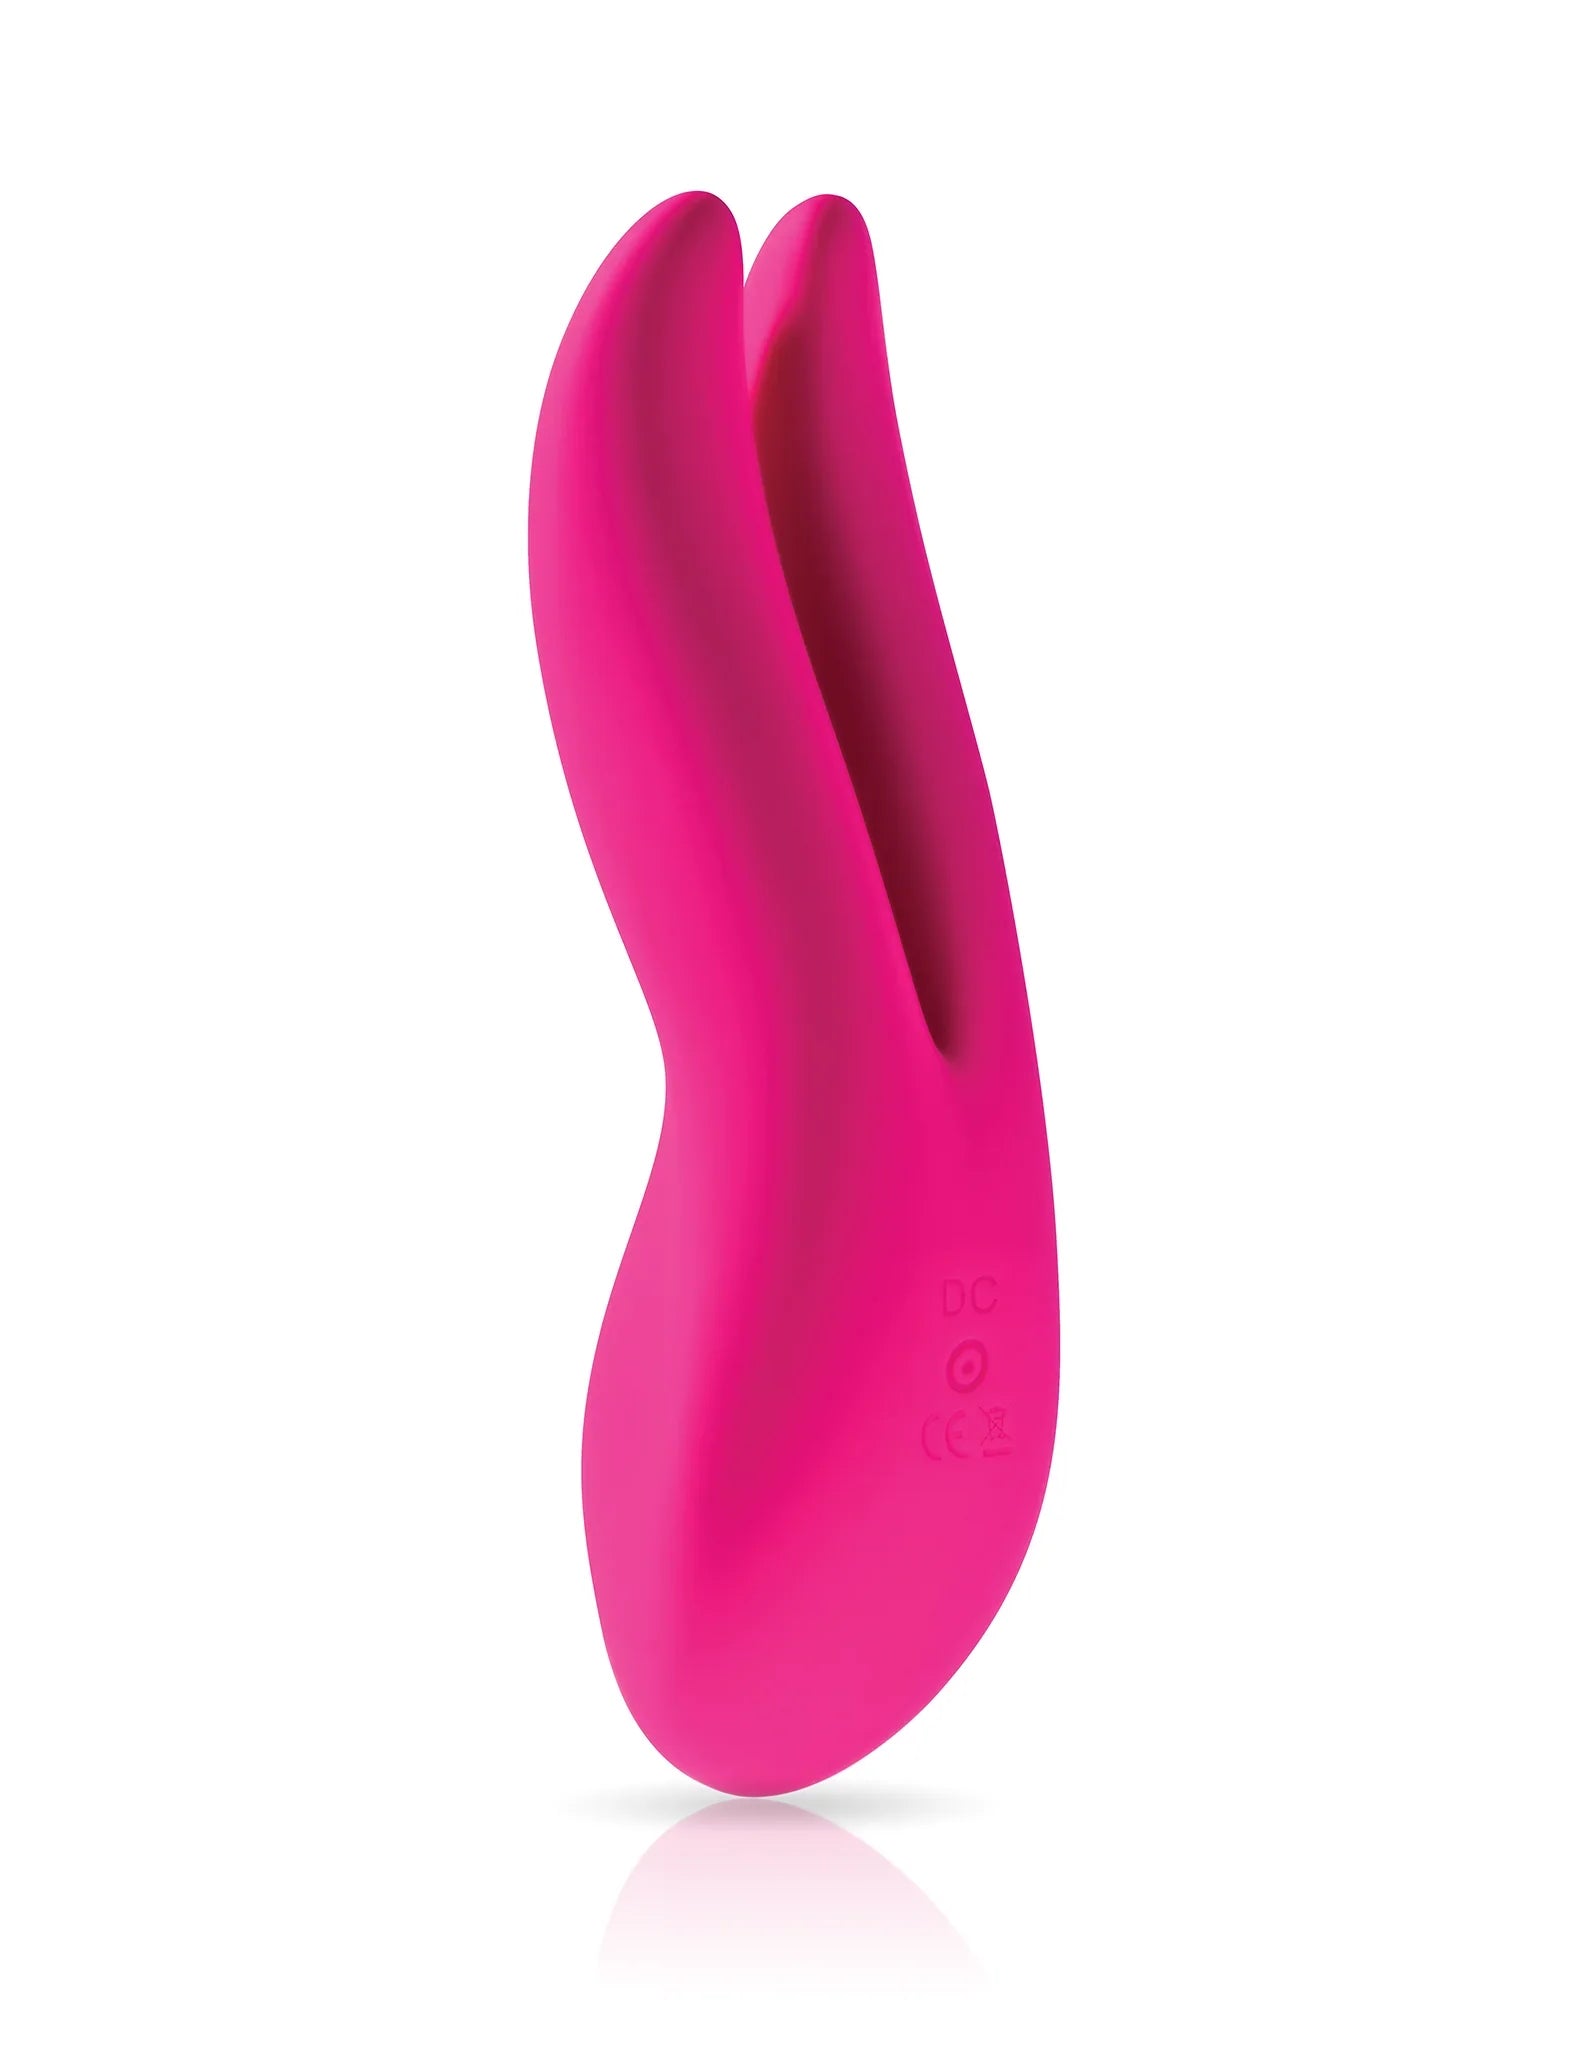 Ascend 2 clitoral stimulator in JJ-pink side facing view